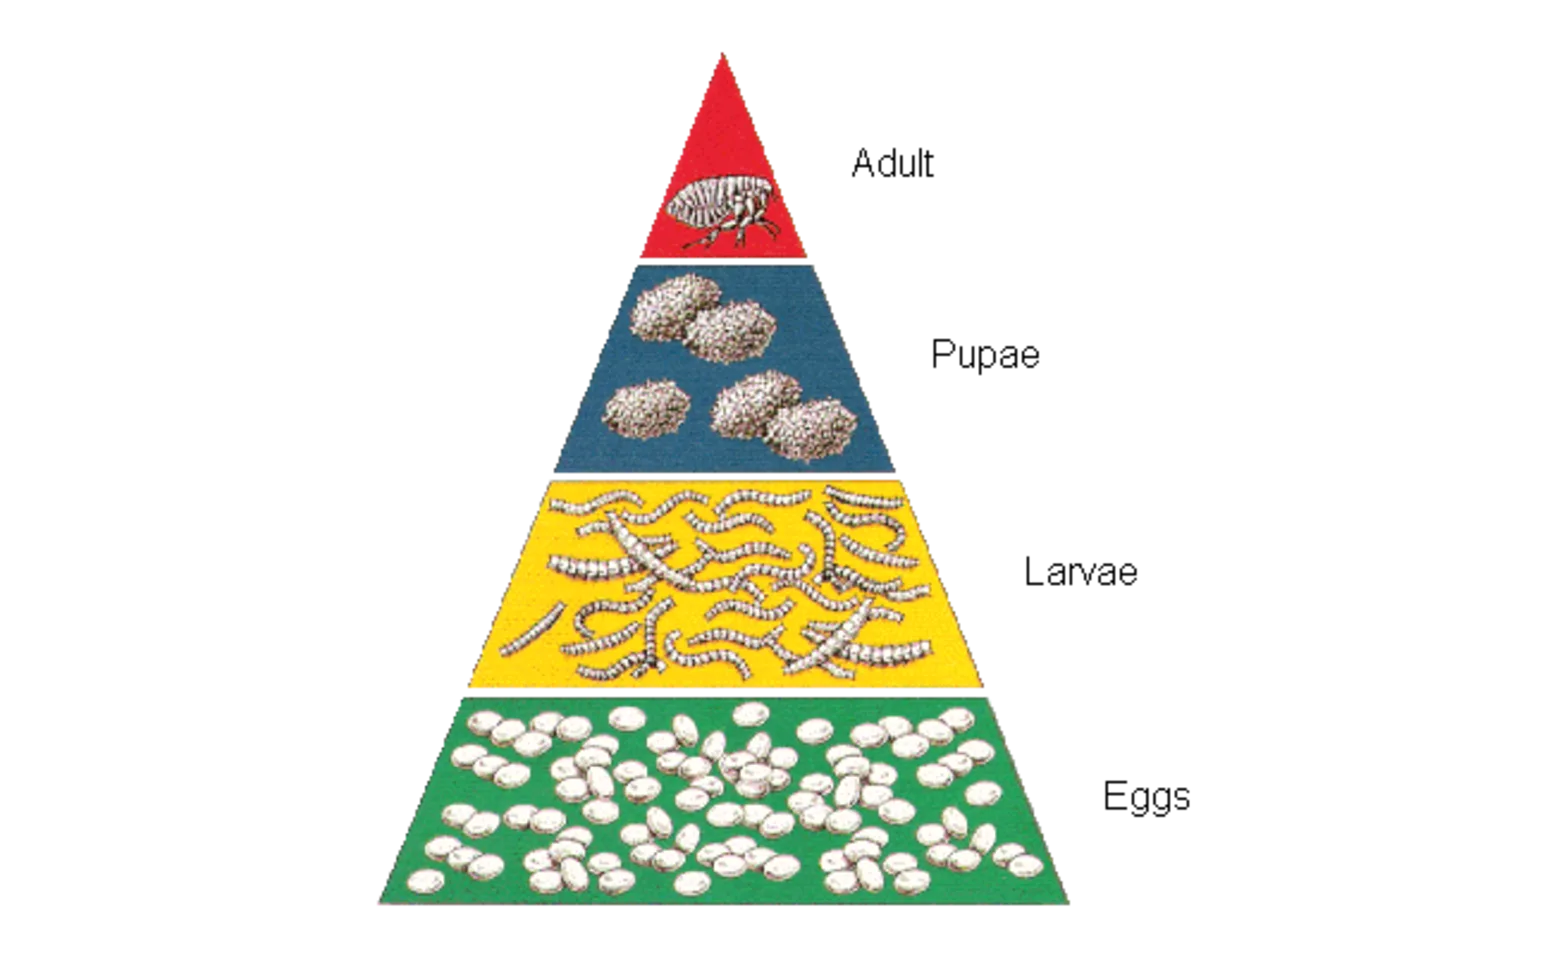 Life cycle pyramid of a flea